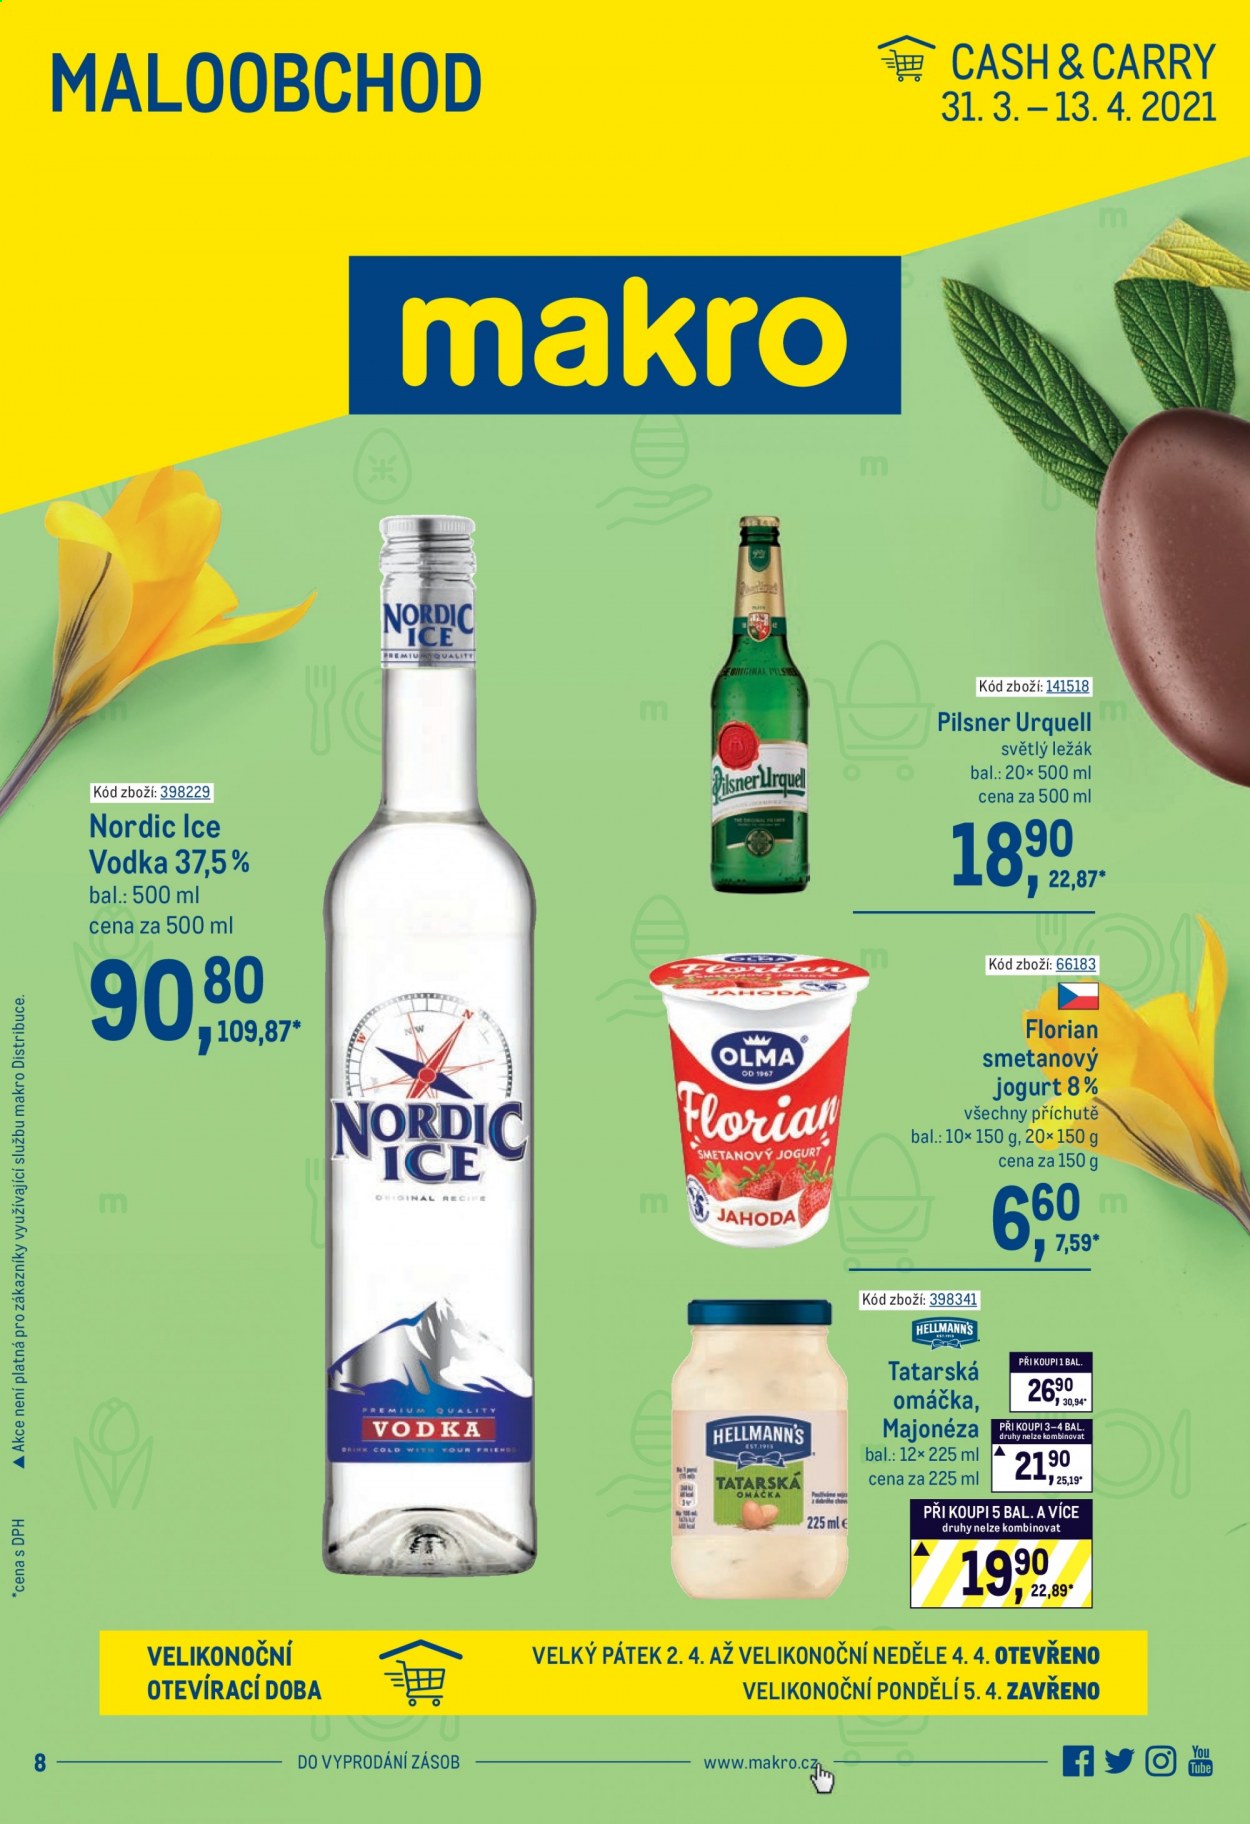 thumbnail - Leták MAKRO - 31.3.2021 - 13.4.2021 - Produkty v akci - vodka, jogurt, Florian, smetanový jogurt, Pilsner Urquell, pivo, alkohol, majonéza, tatarská omáčka. Strana 1.